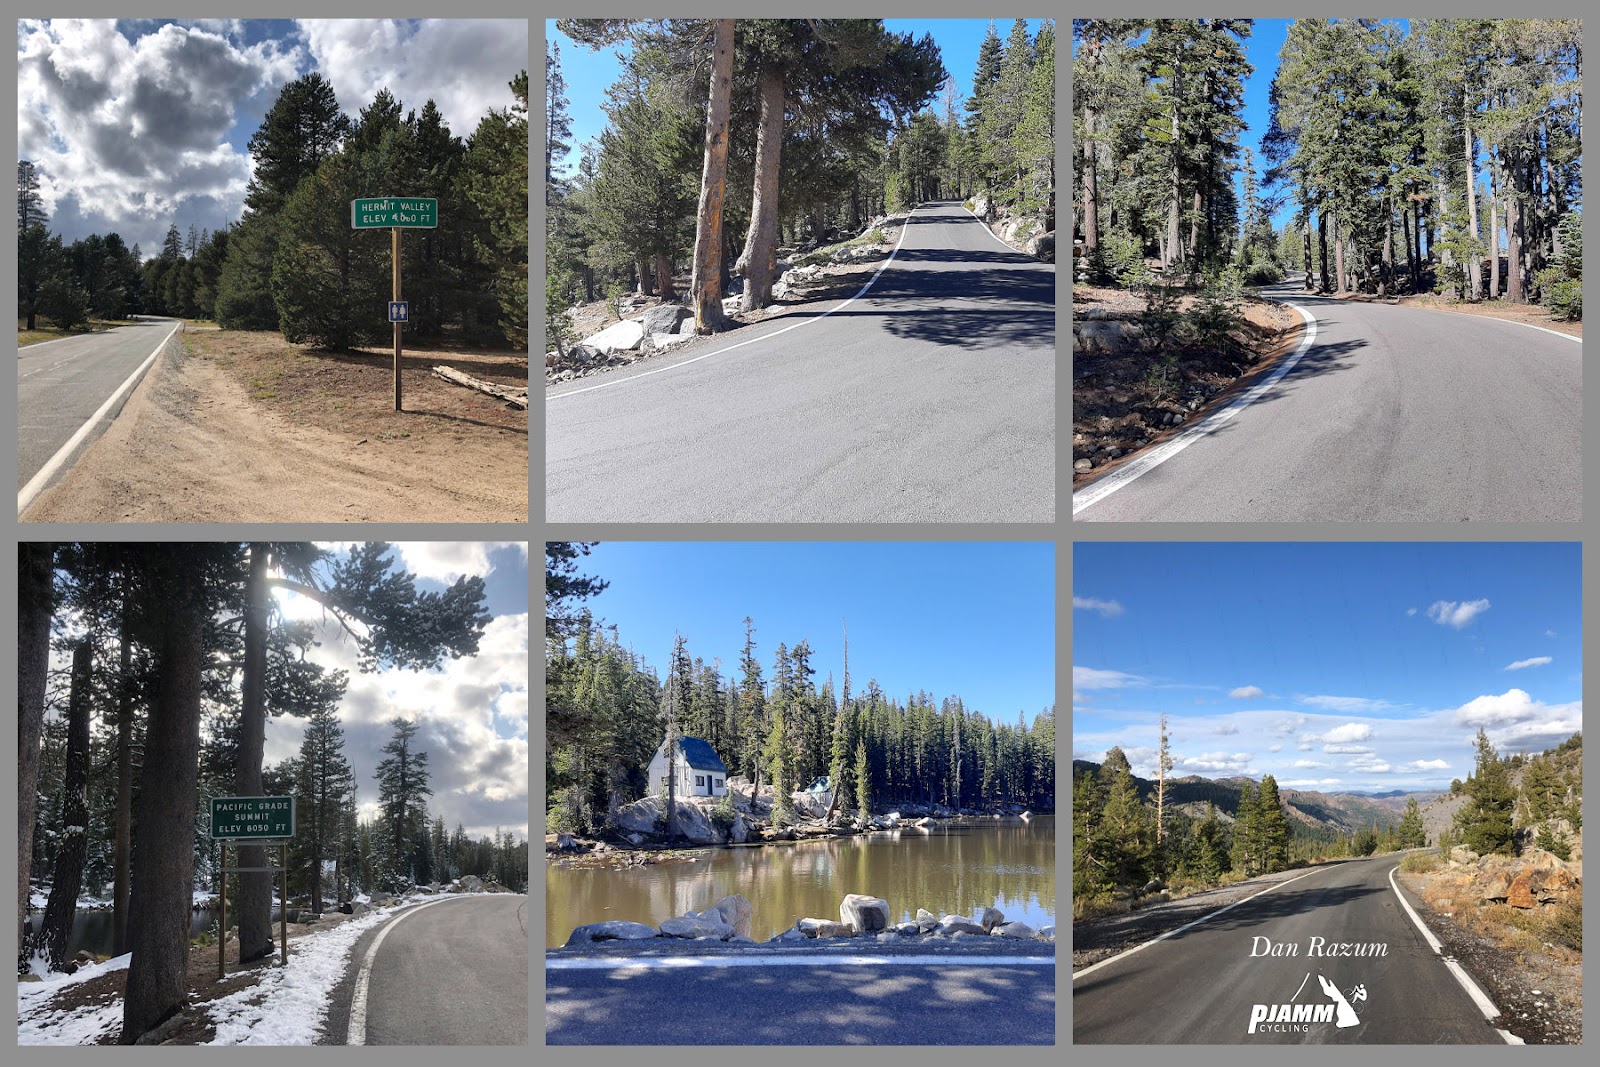 Photo collage of views along the Pacific Grade climb, alpine setting, newly paved roadway, alpine lake